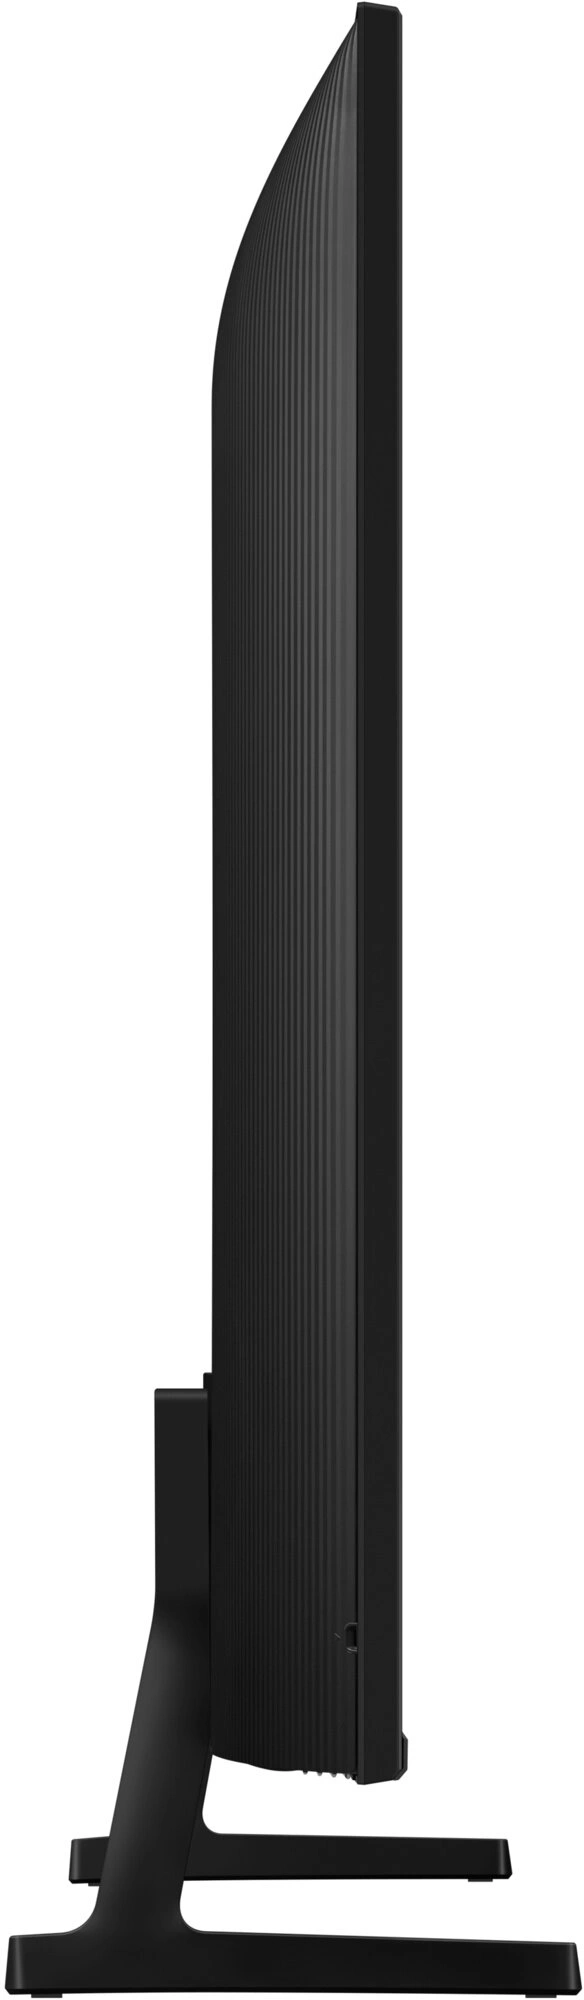 Samsung UE75DU7172 - 189cm